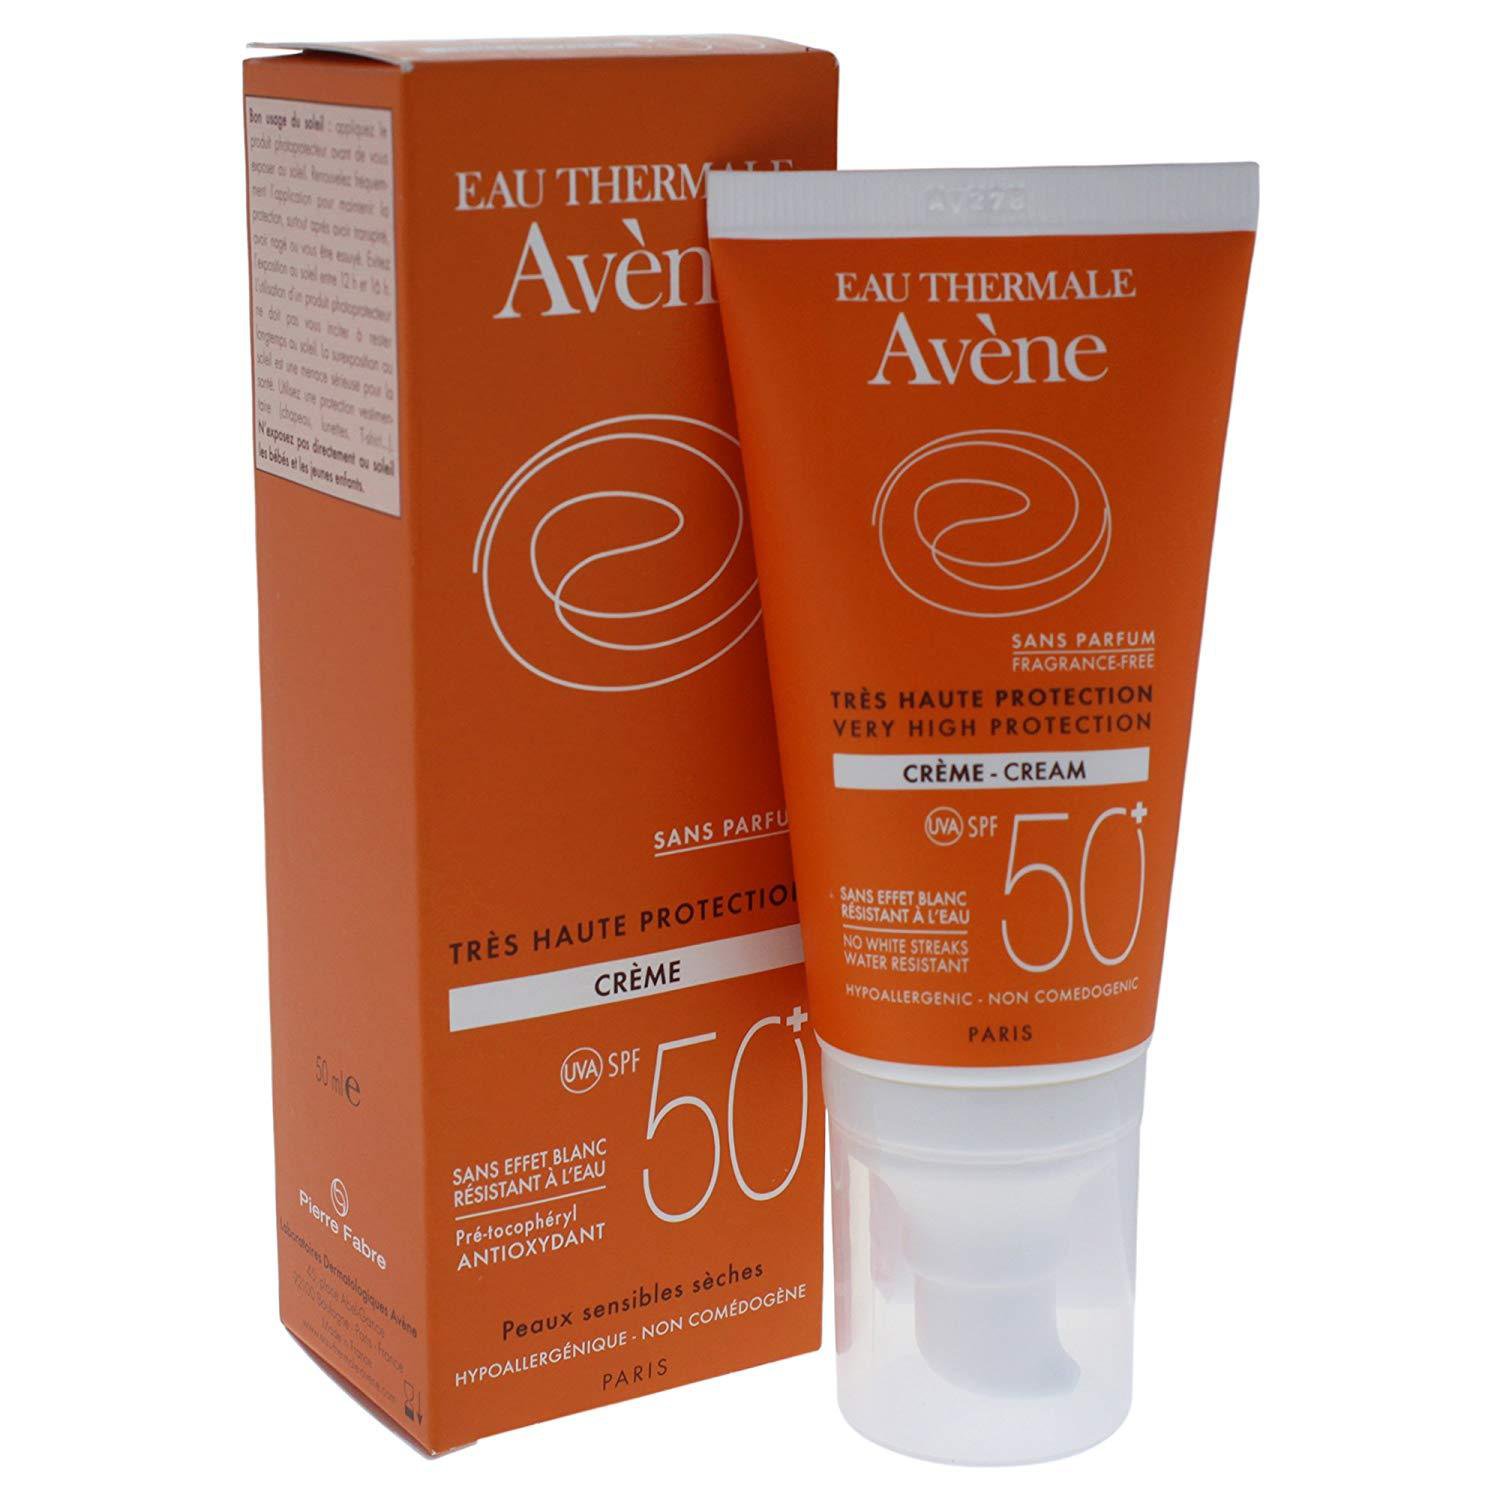 Spf 50 для лица цена. Avene very High Protection spf50 Cream. Avene 50+ very High Protection. Avene крем солнцезащитный SPF 50+ 50 мл. Крем от солнца Авен 50.